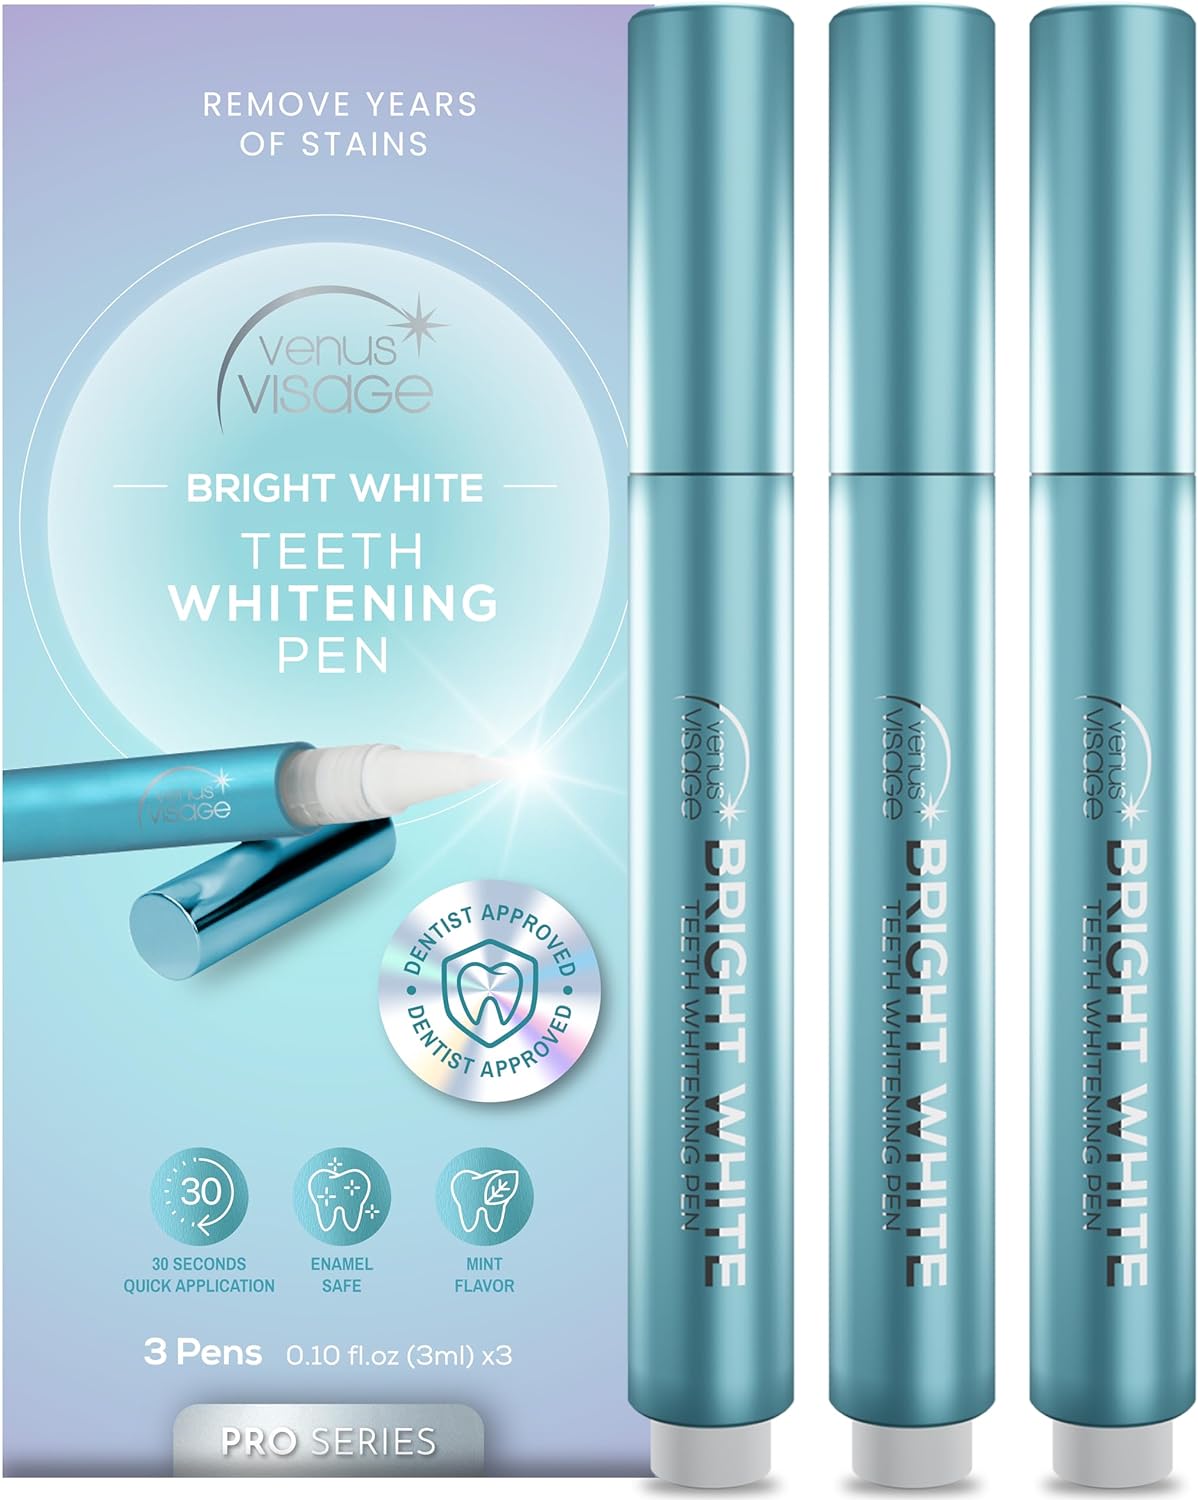 Venus Visage Teeth Whitening Pen Pro Series